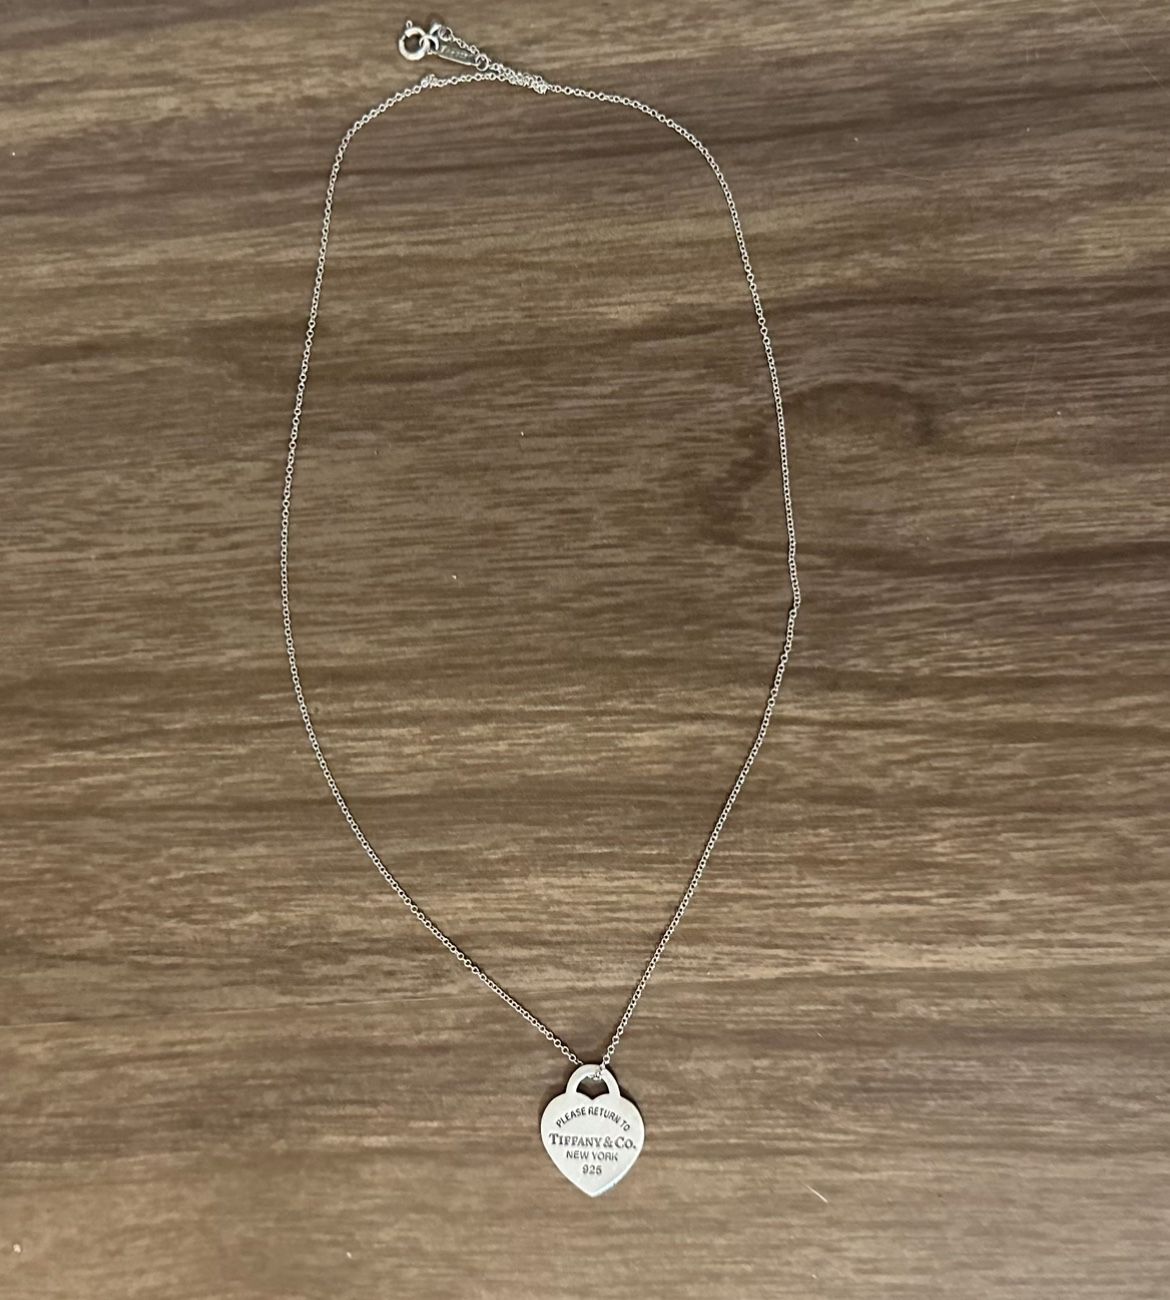 Tiffany Co necklace 